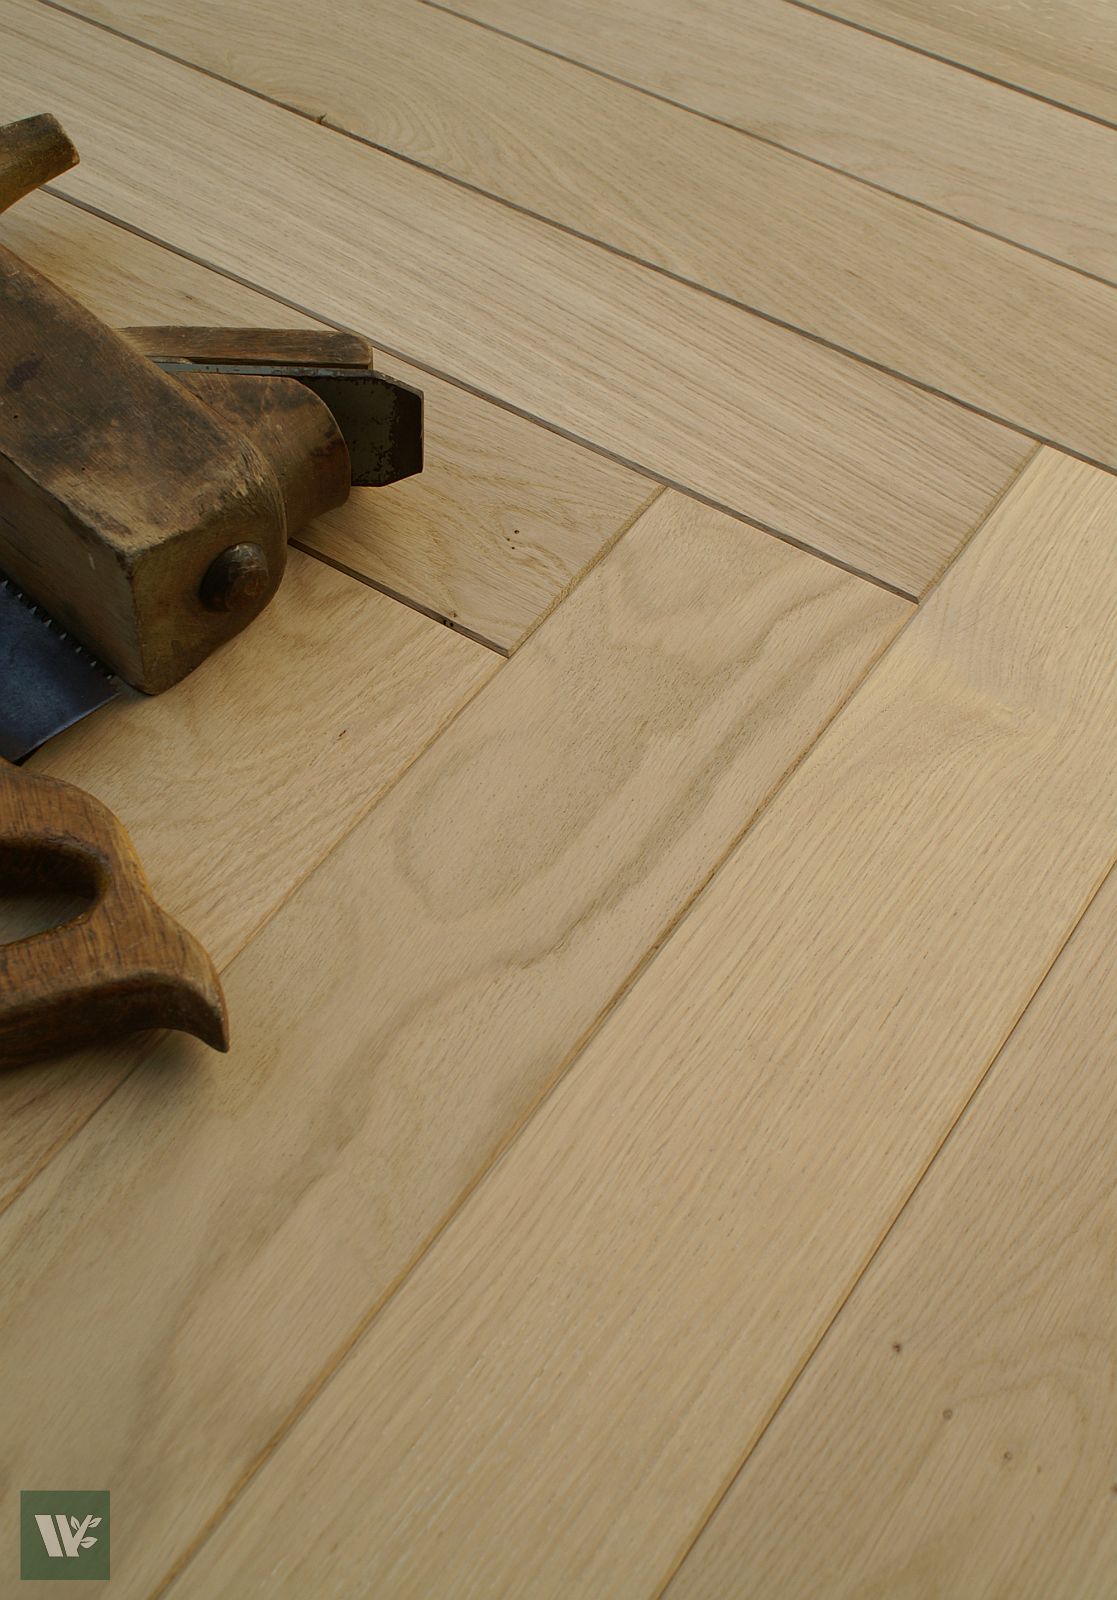 15mm thick oak flooring engineered